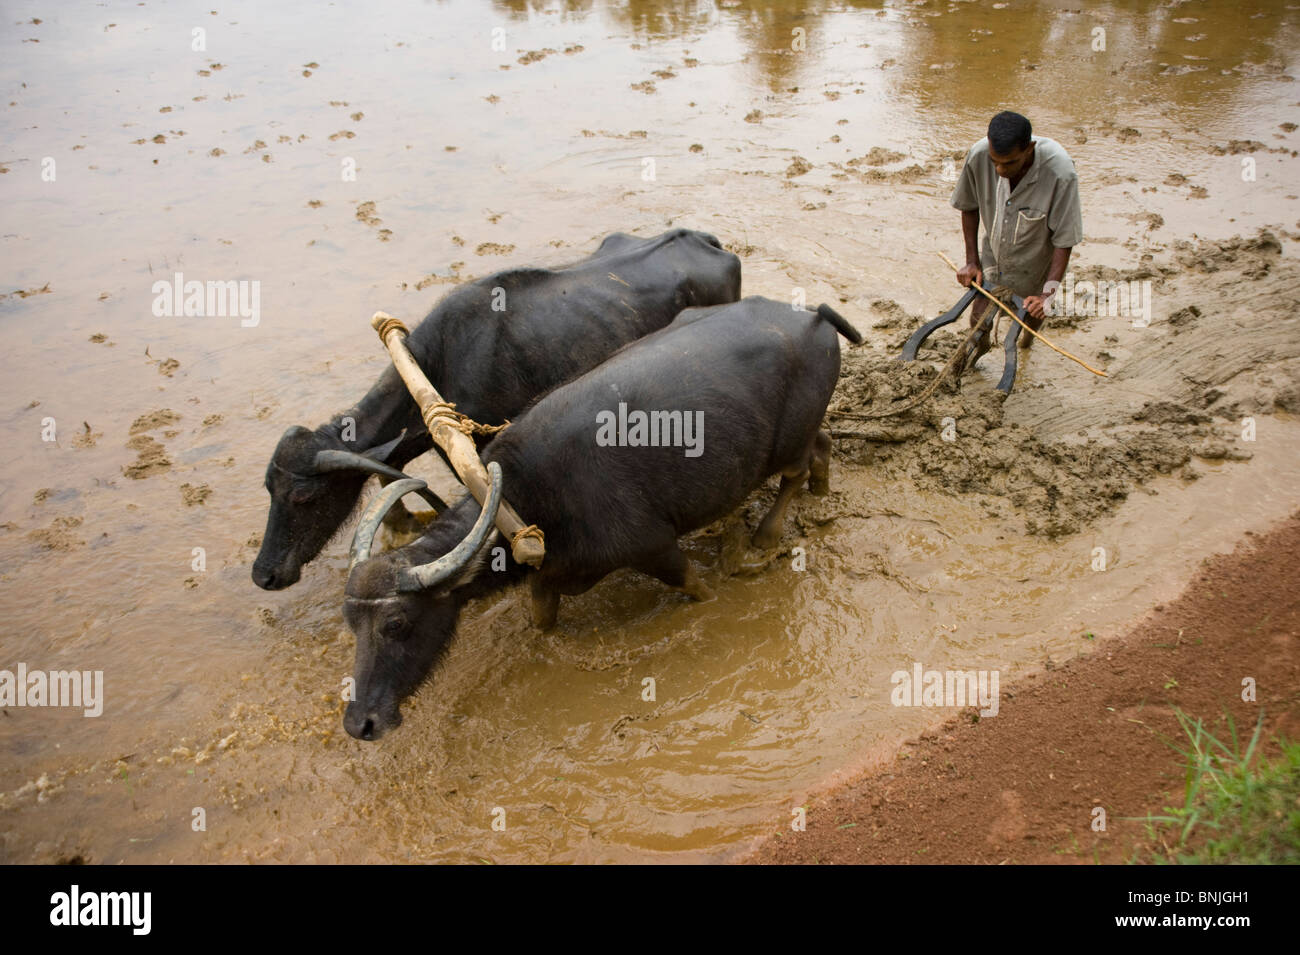 Sri Lanka Asia Plough rice field water Water buffalo cattle hard work Stock  Photo - Alamy